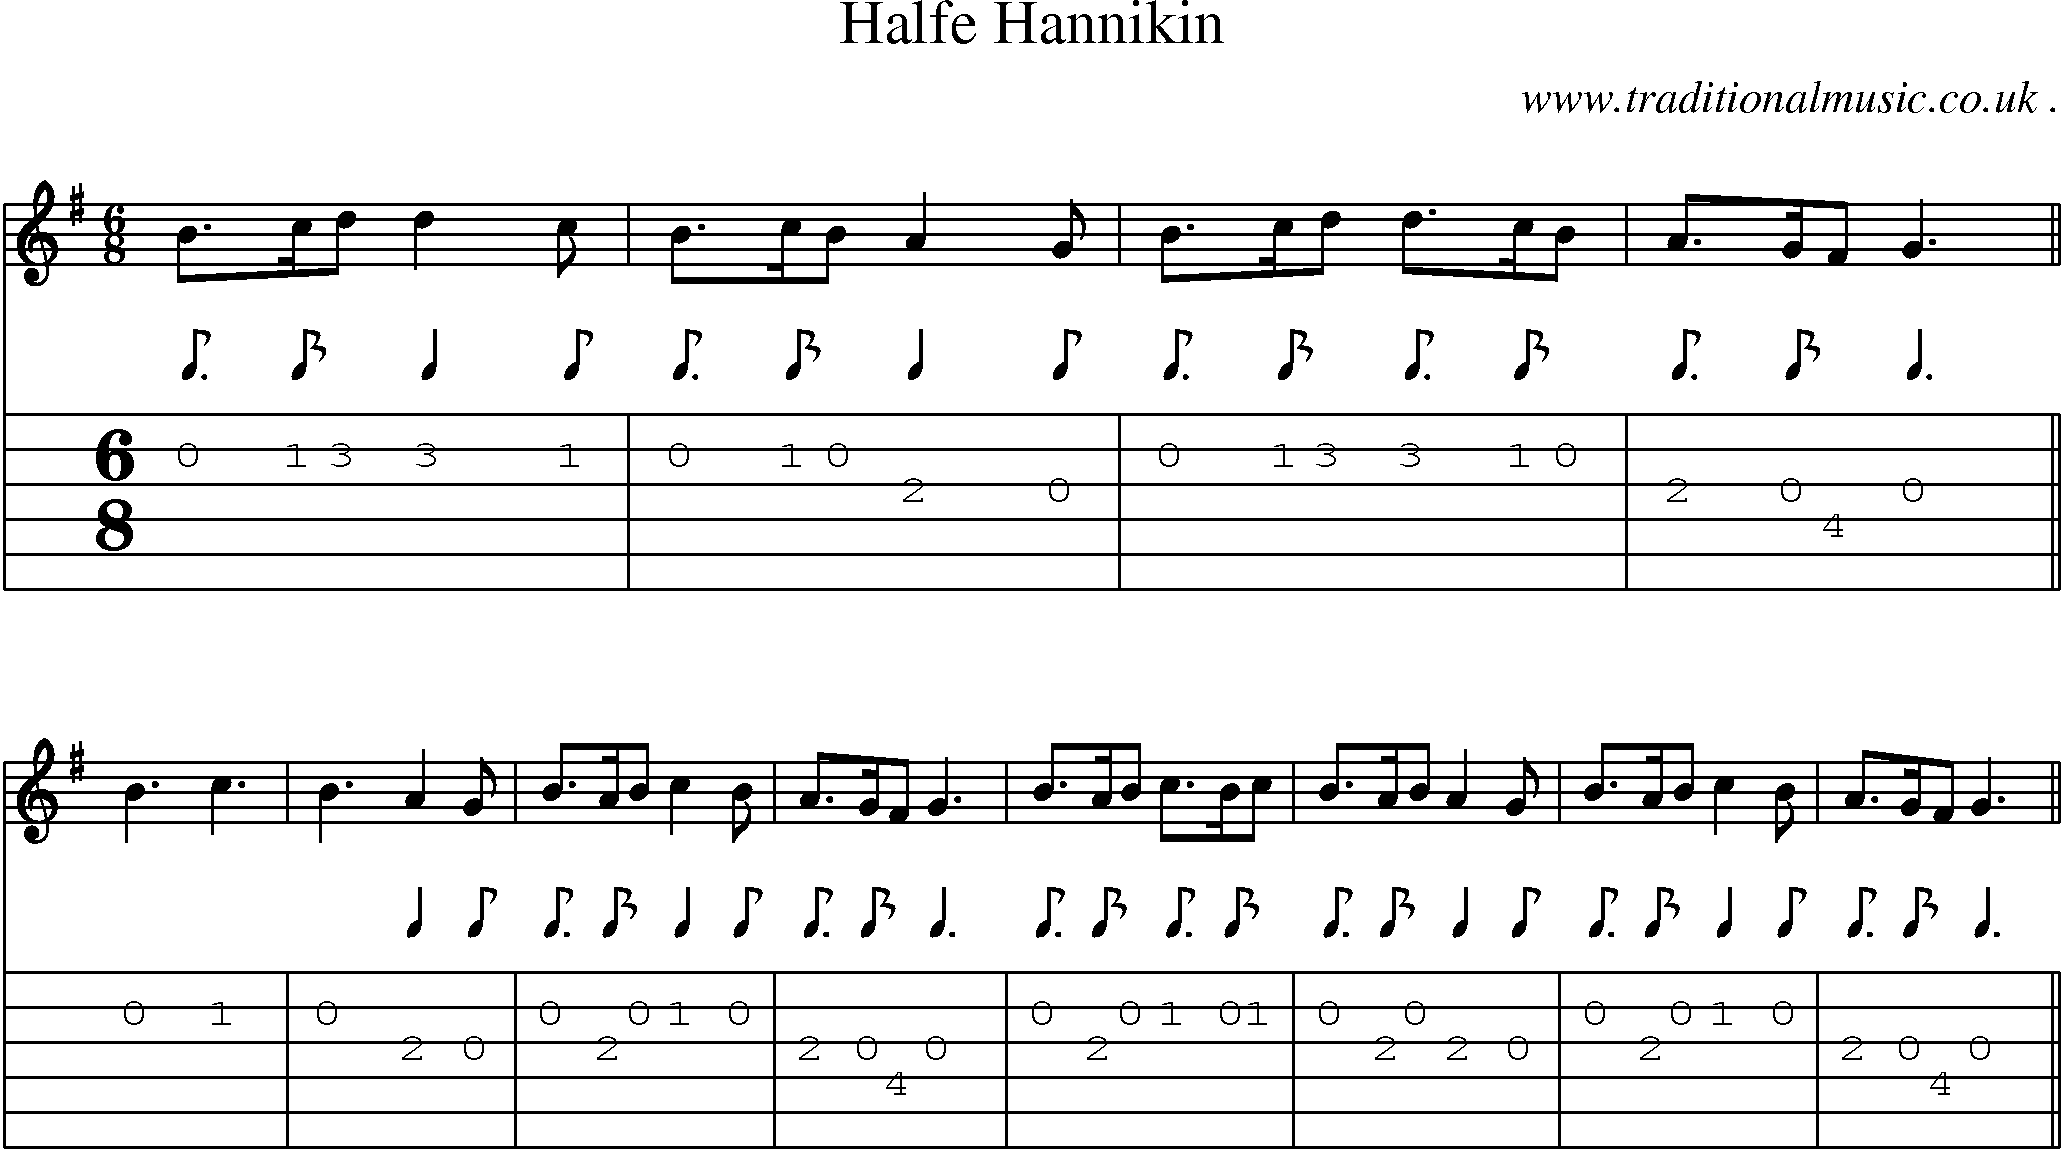 Sheet-music  score, Chords and Guitar Tabs for Halfe Hannikin